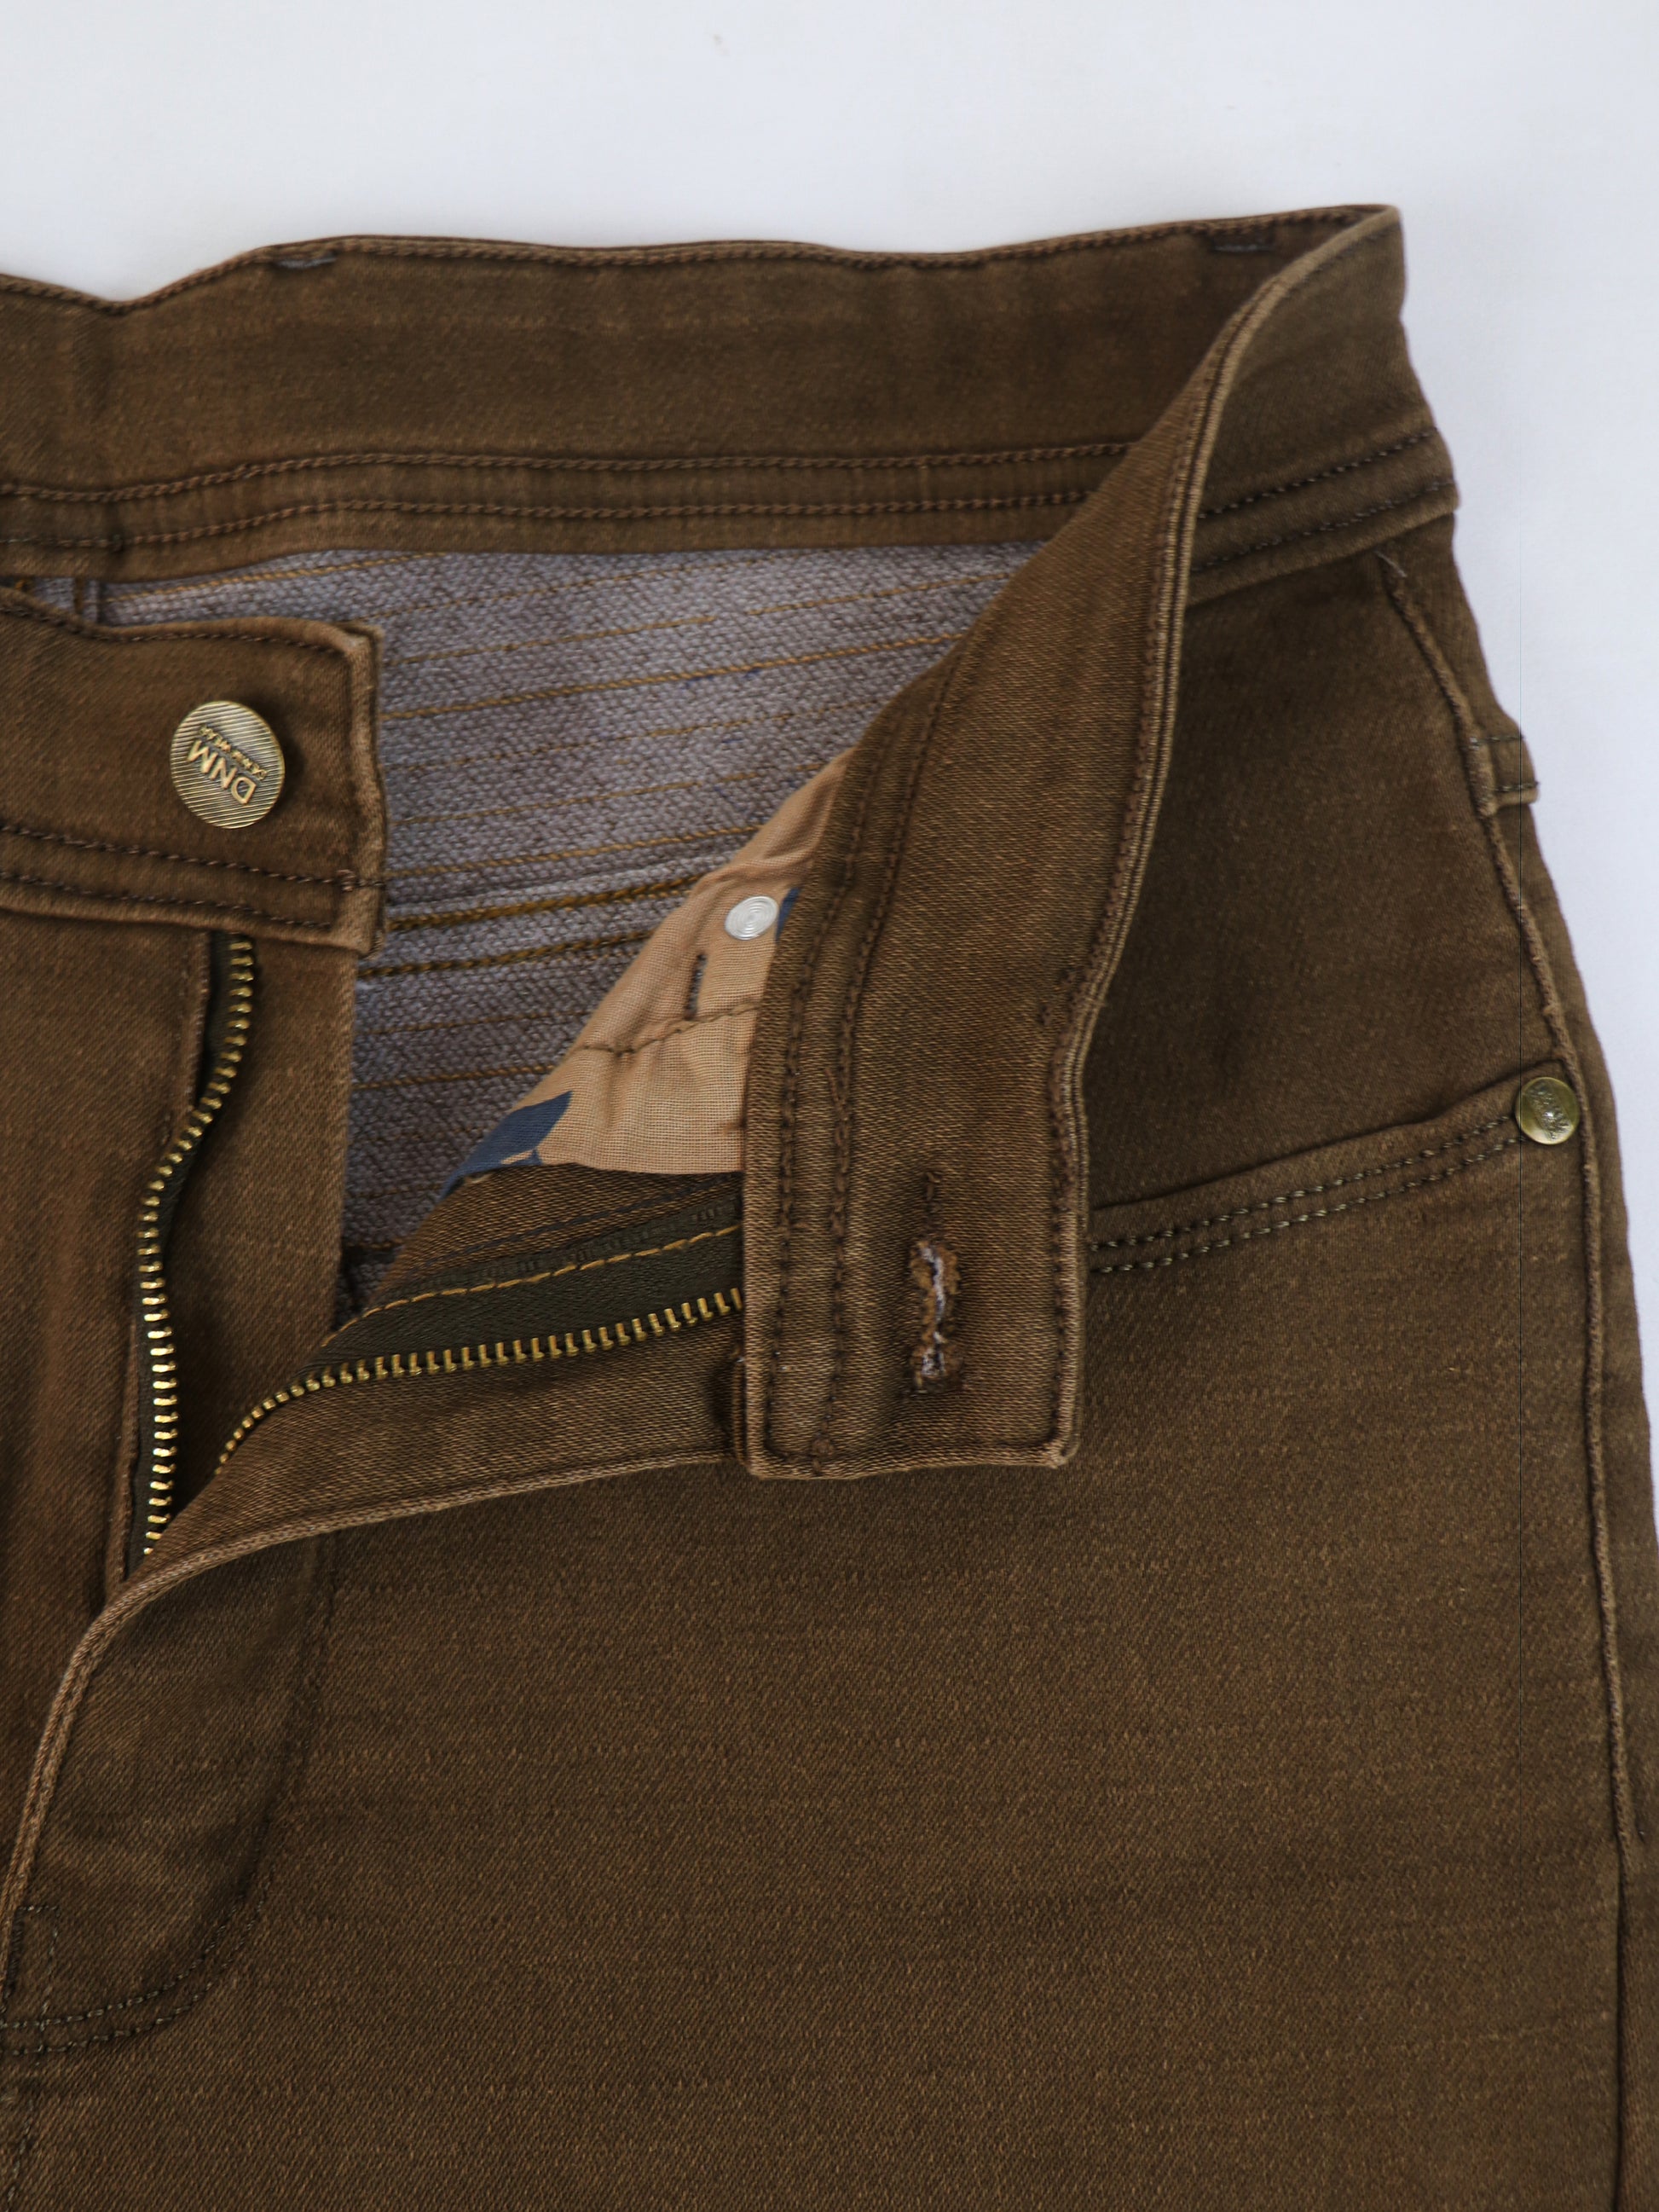 Men's Stretchable Regular Fit Denim Jeans Brown – The Cut Price